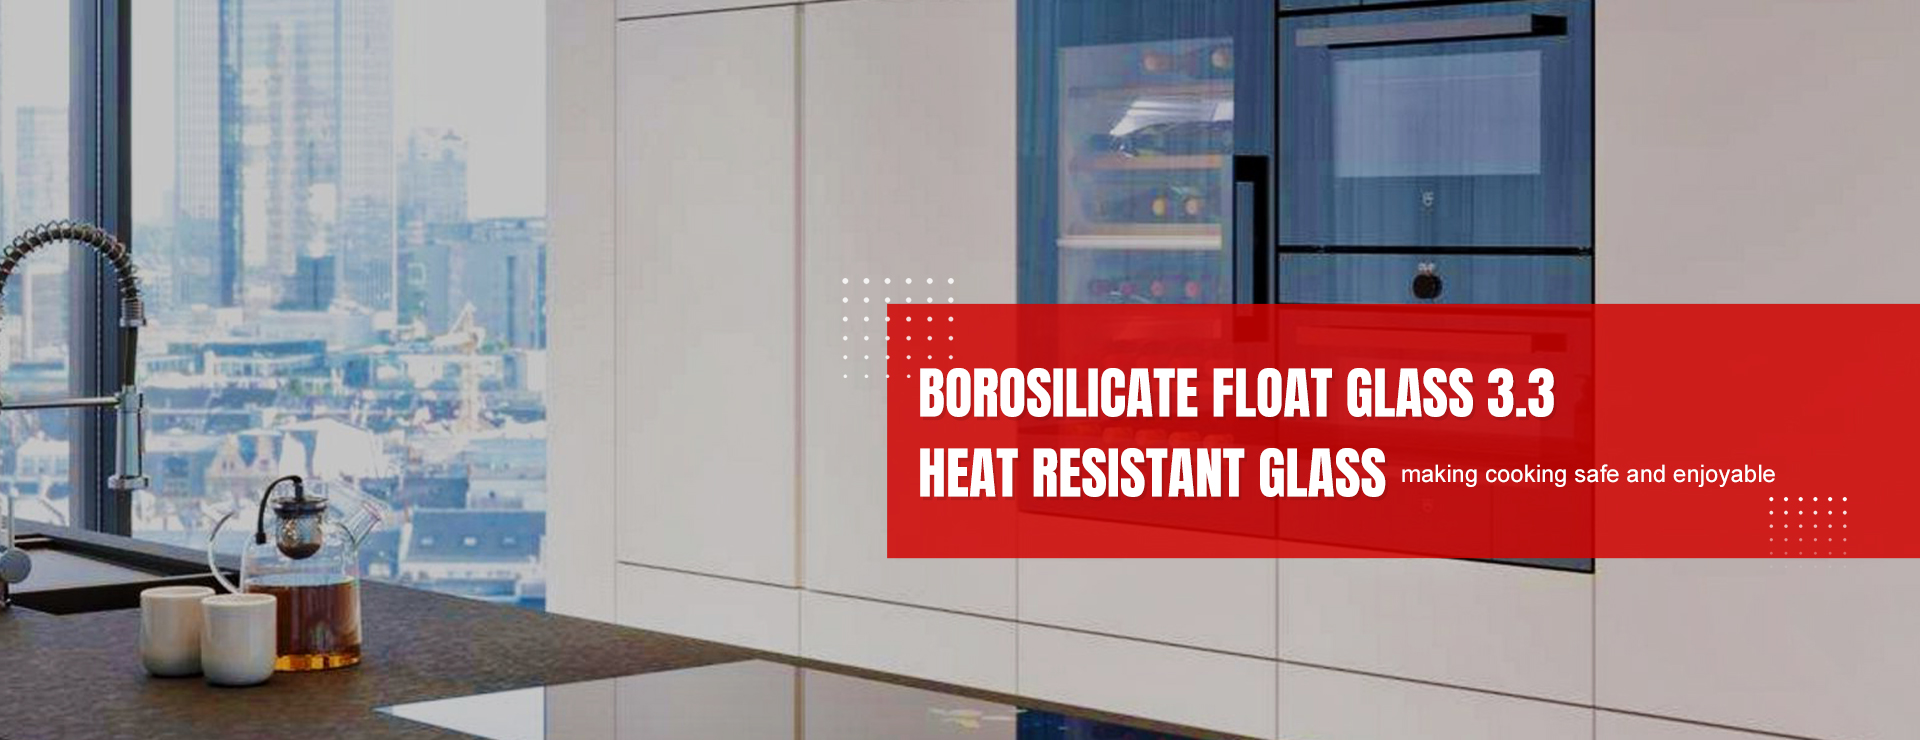 Borosilicate Float Glass 3.3